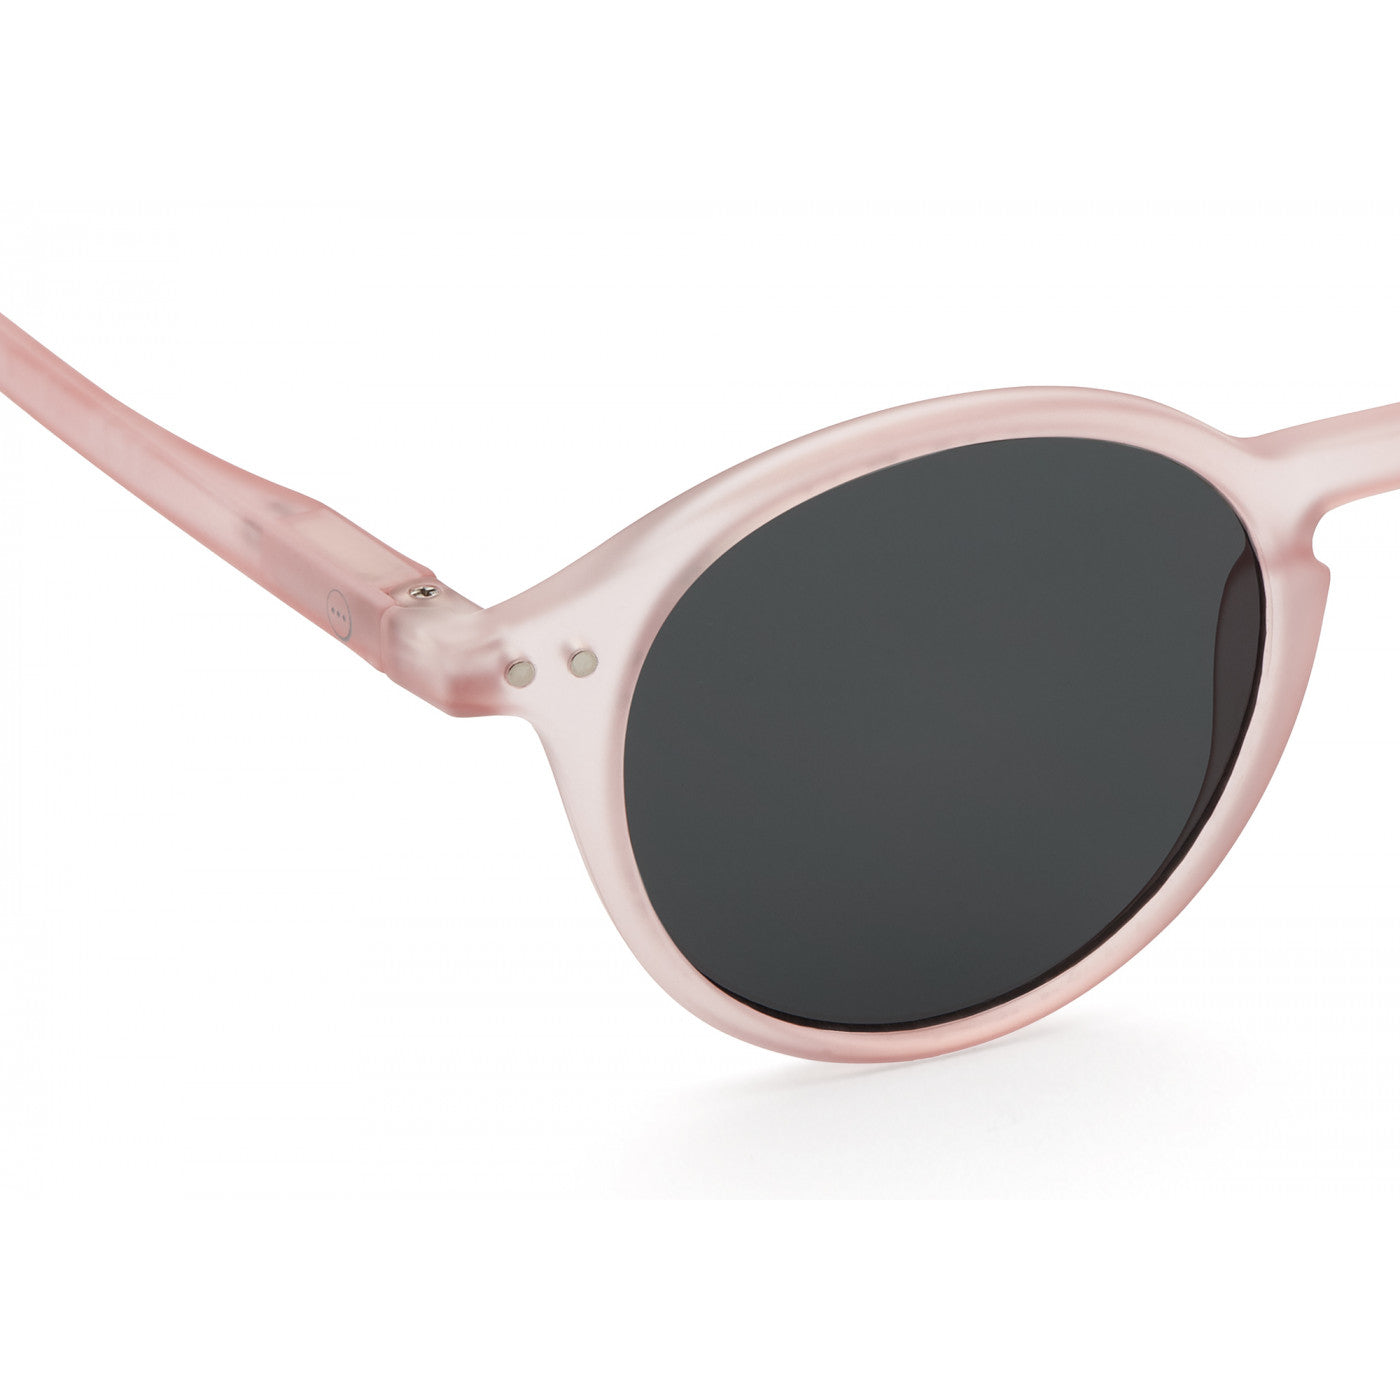 Unisex Sunglasses - Style D - Pink